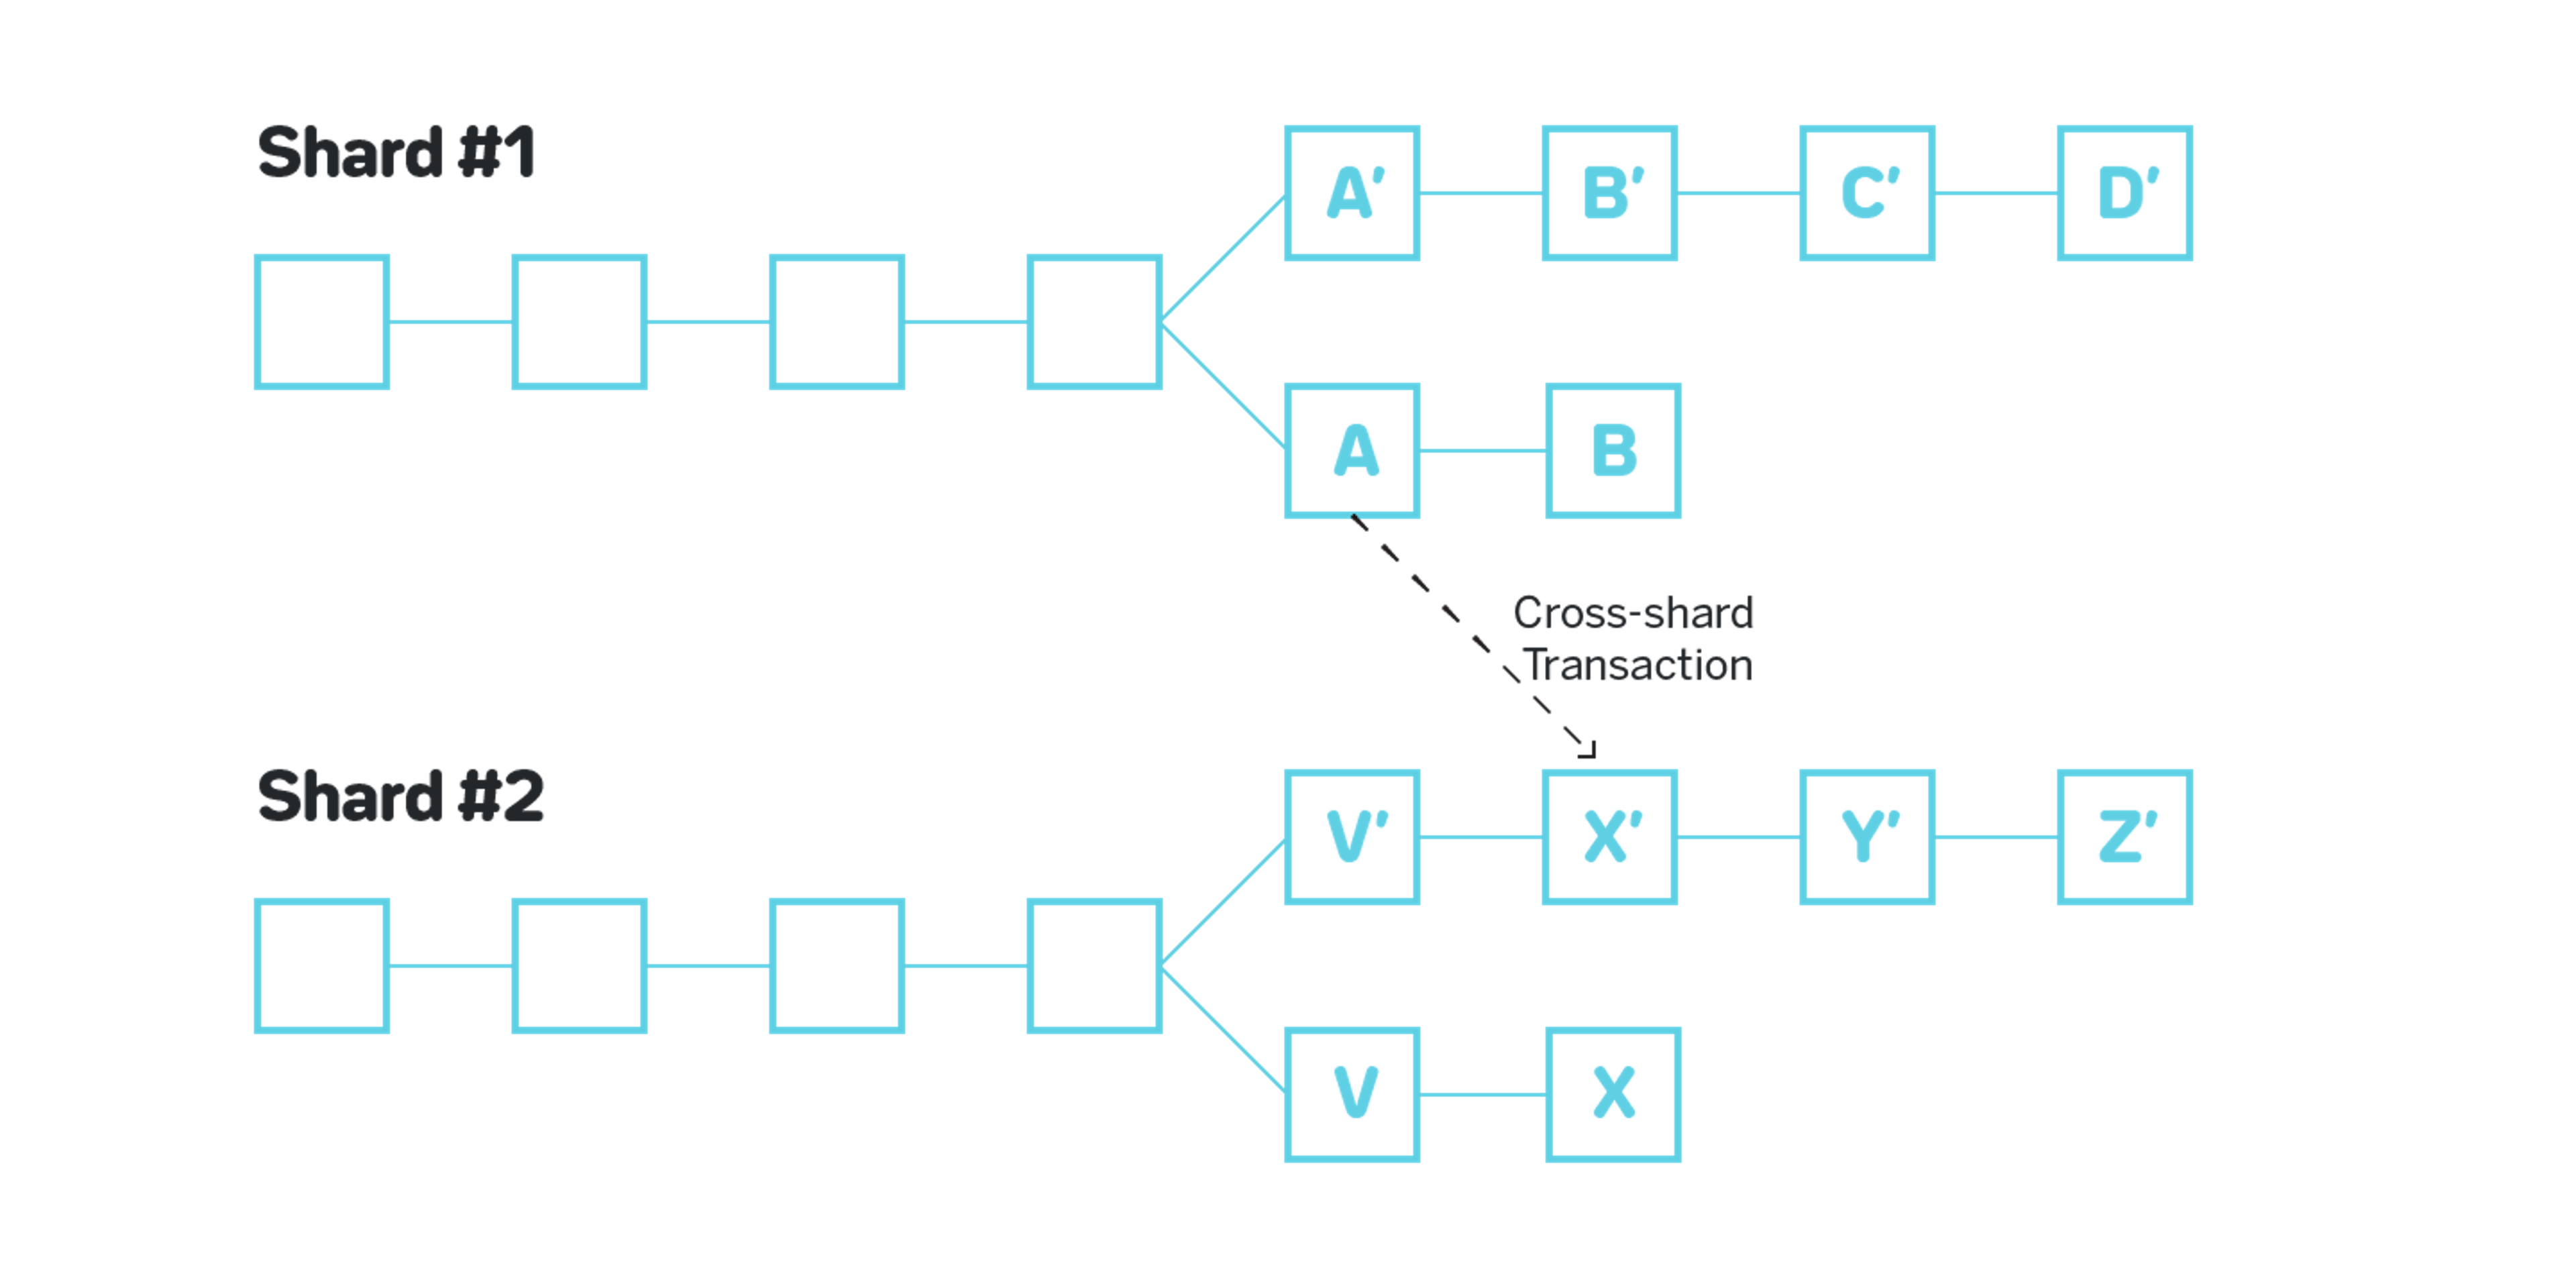 A basic shard design. Splits the blockchain into multiple ‘shards’ while allowing cross-shard communication.